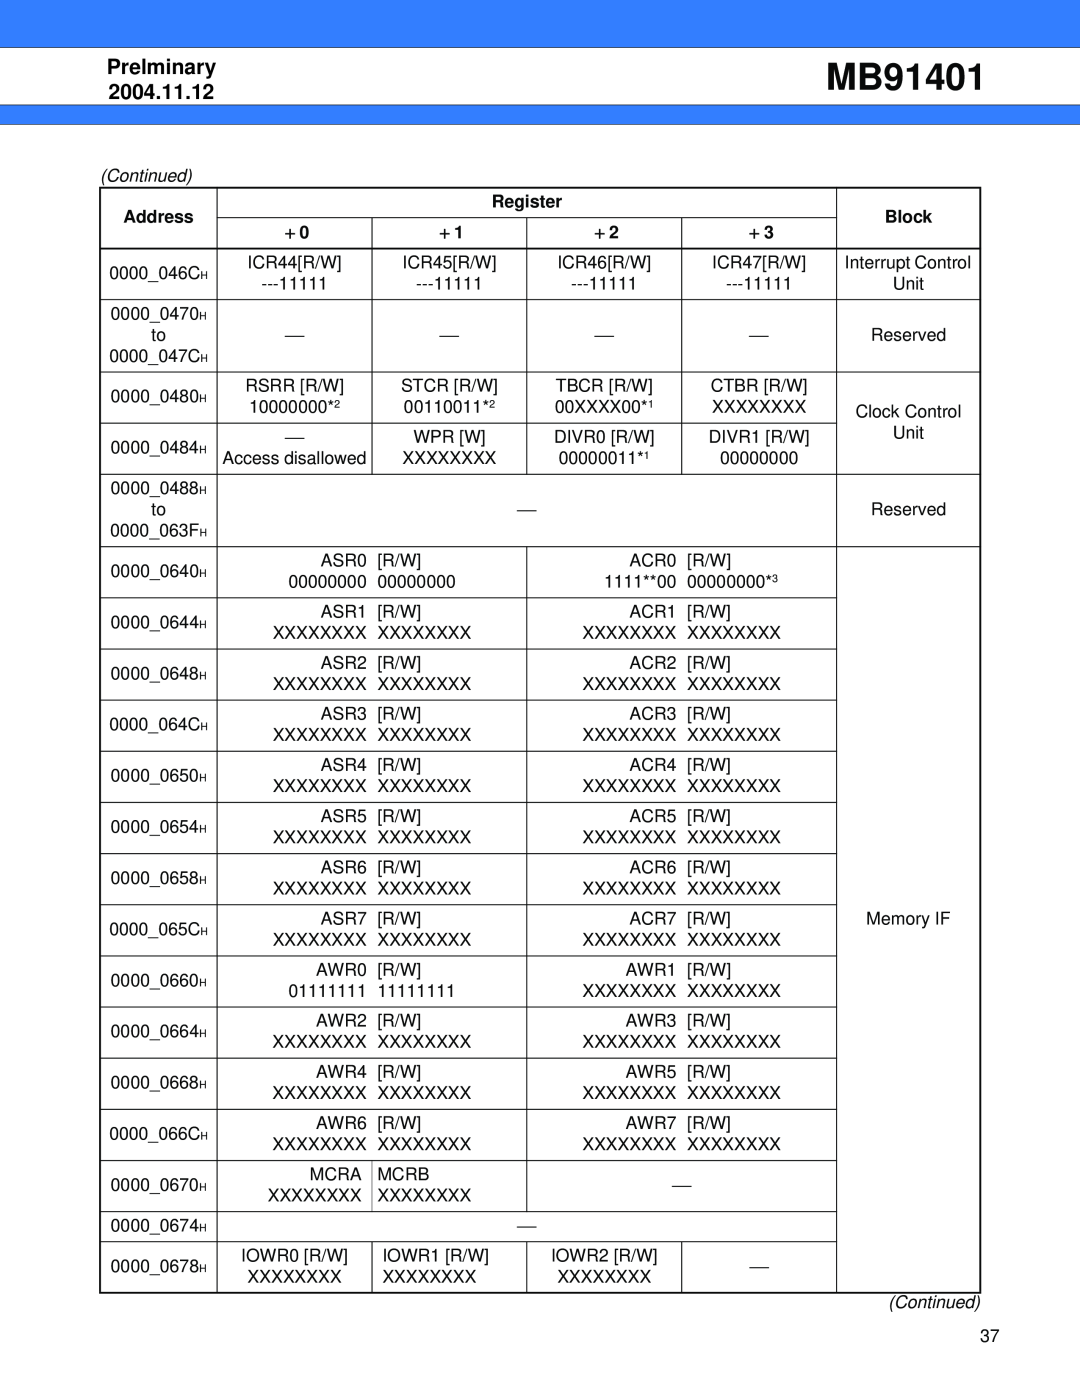 Fujitsu MB91401 manual Address, Register, Block, Prelminary, 2004.11.12 